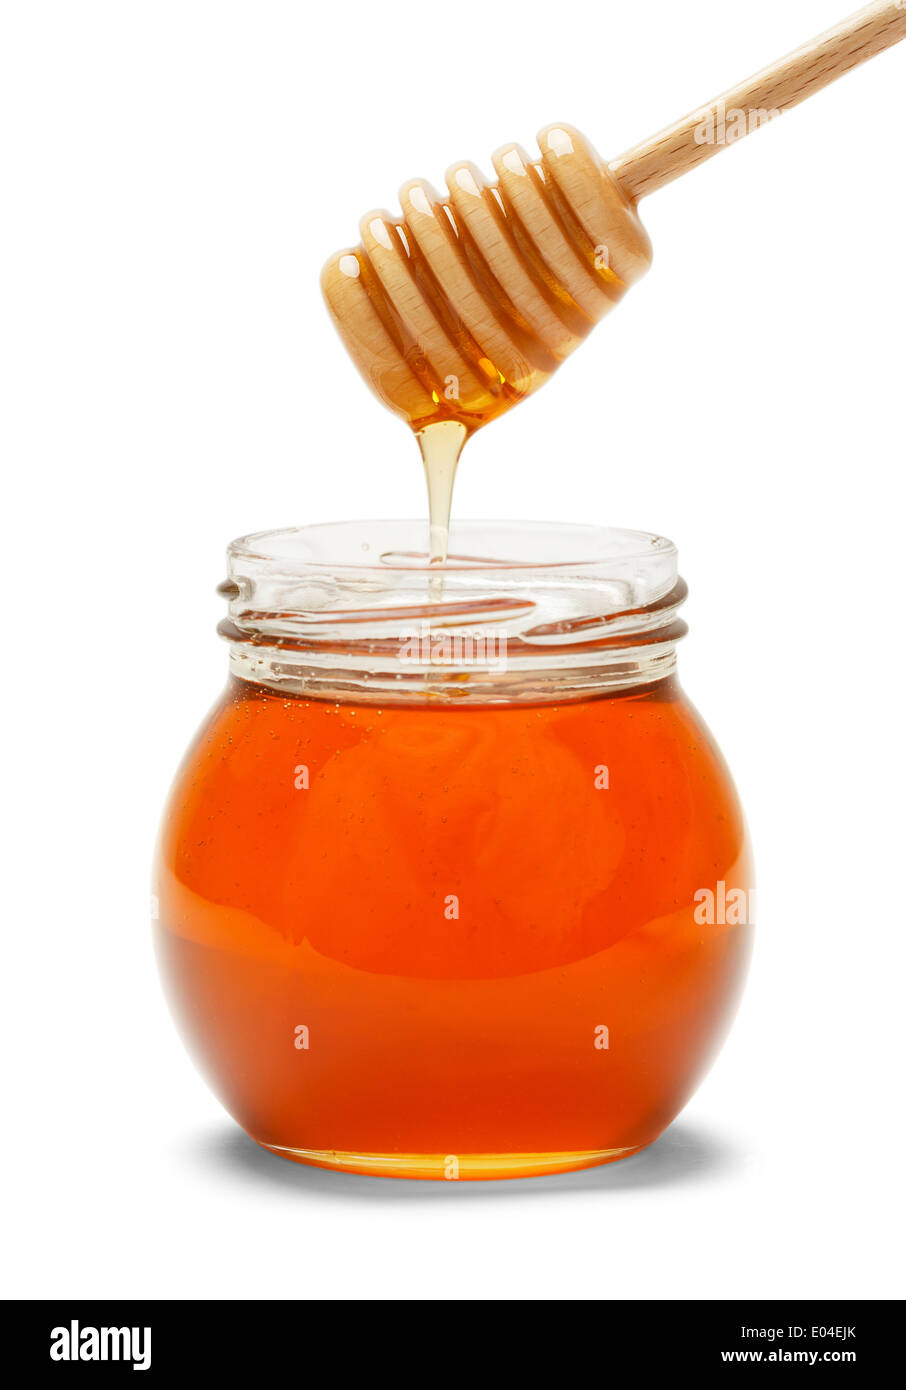 Glasglas Honig mit rühren Stock, Isolated on White Background. Stockfoto